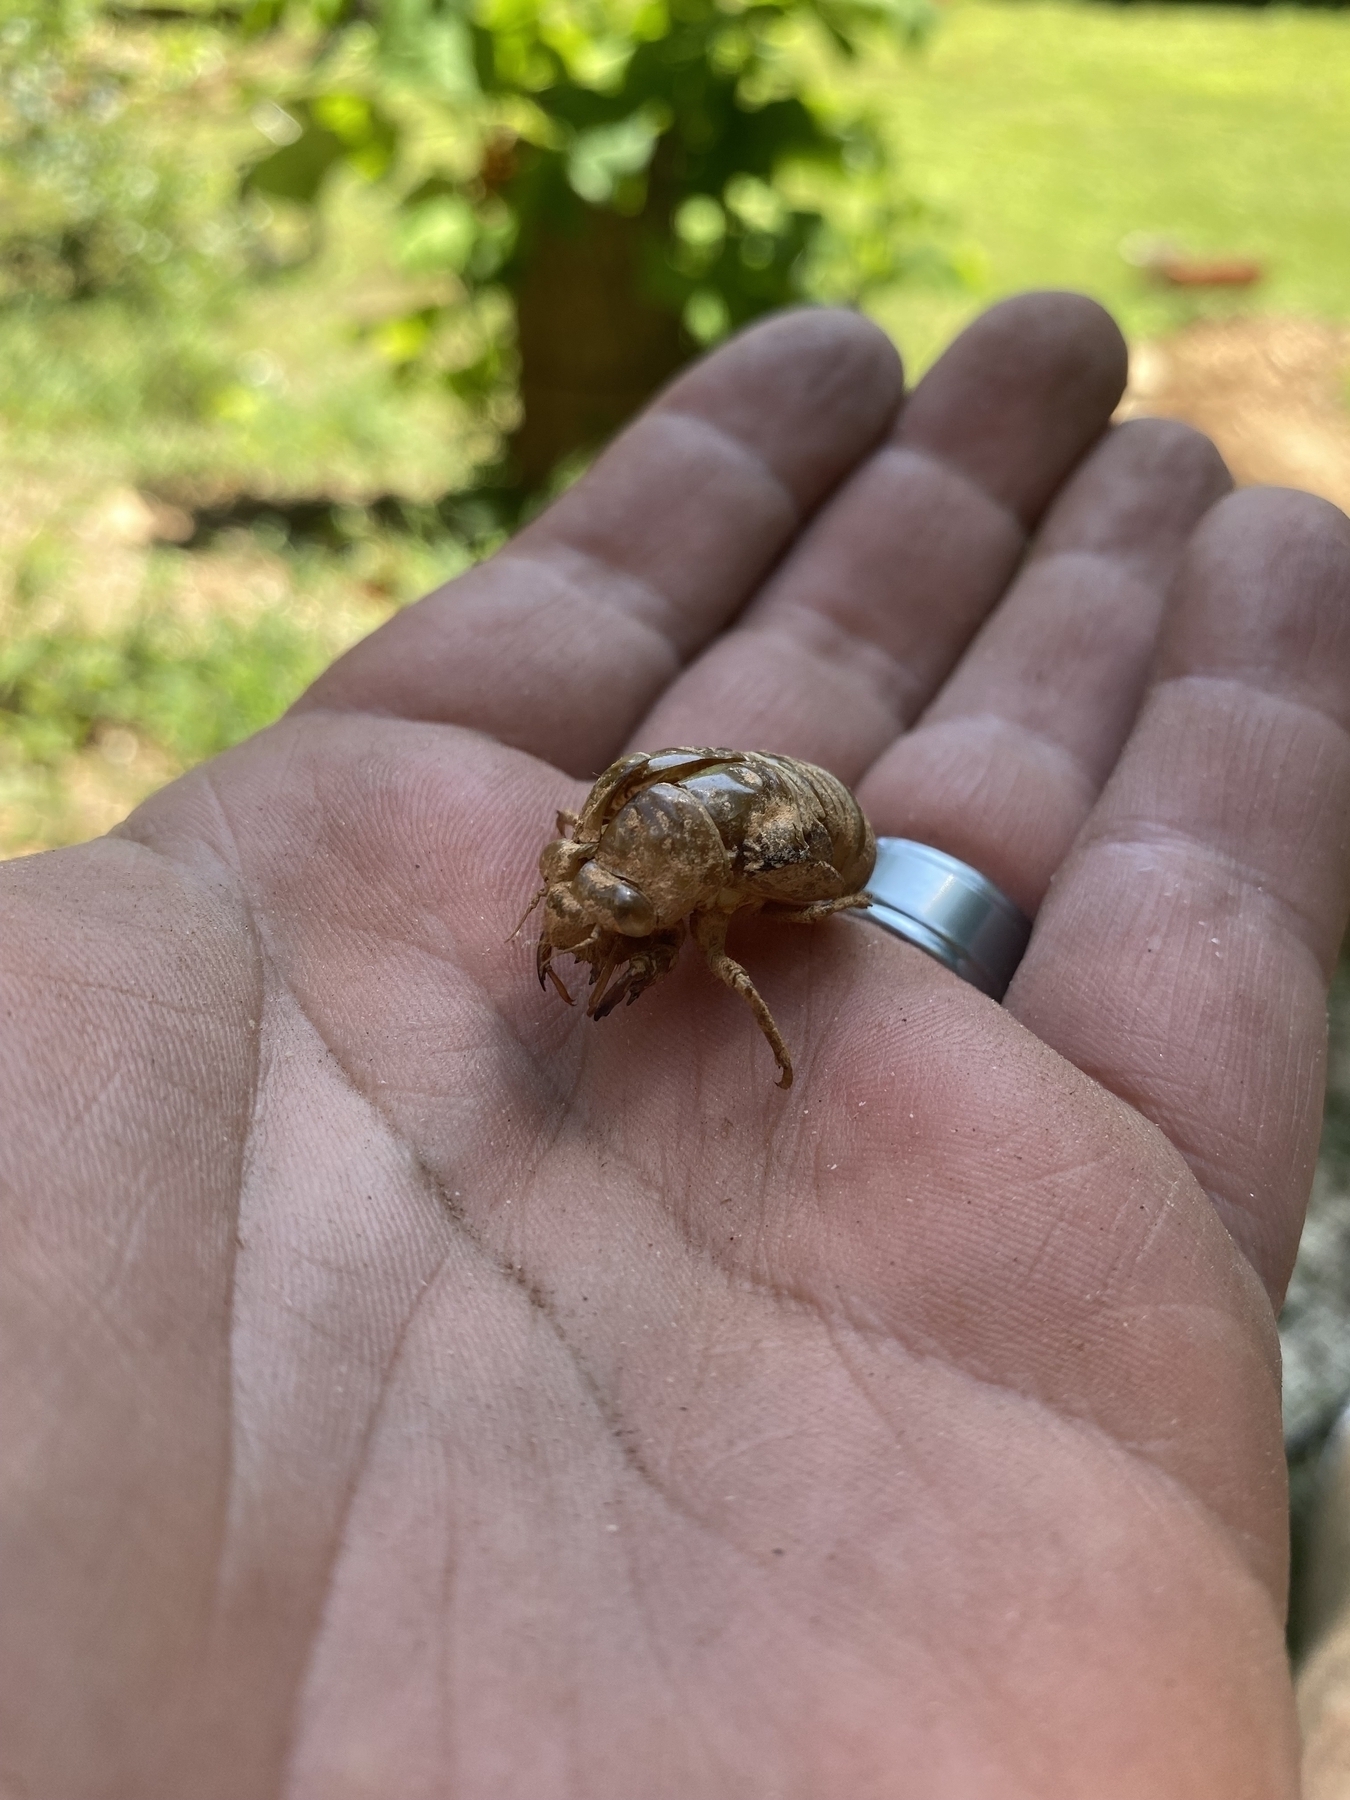 A cicada exoskeleton 